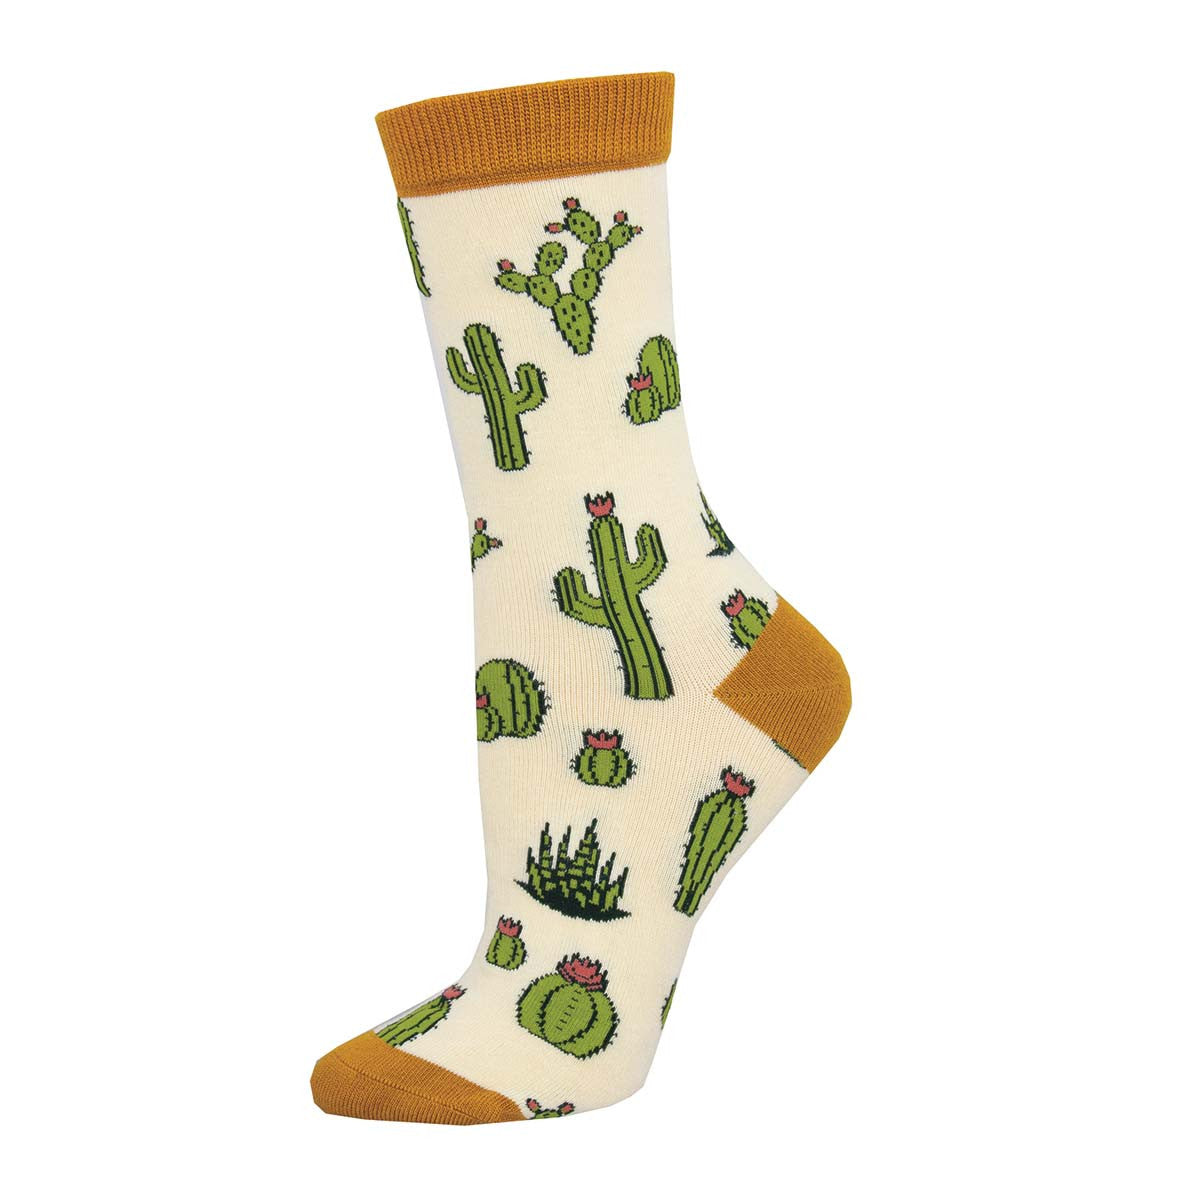 King Cactus Socks